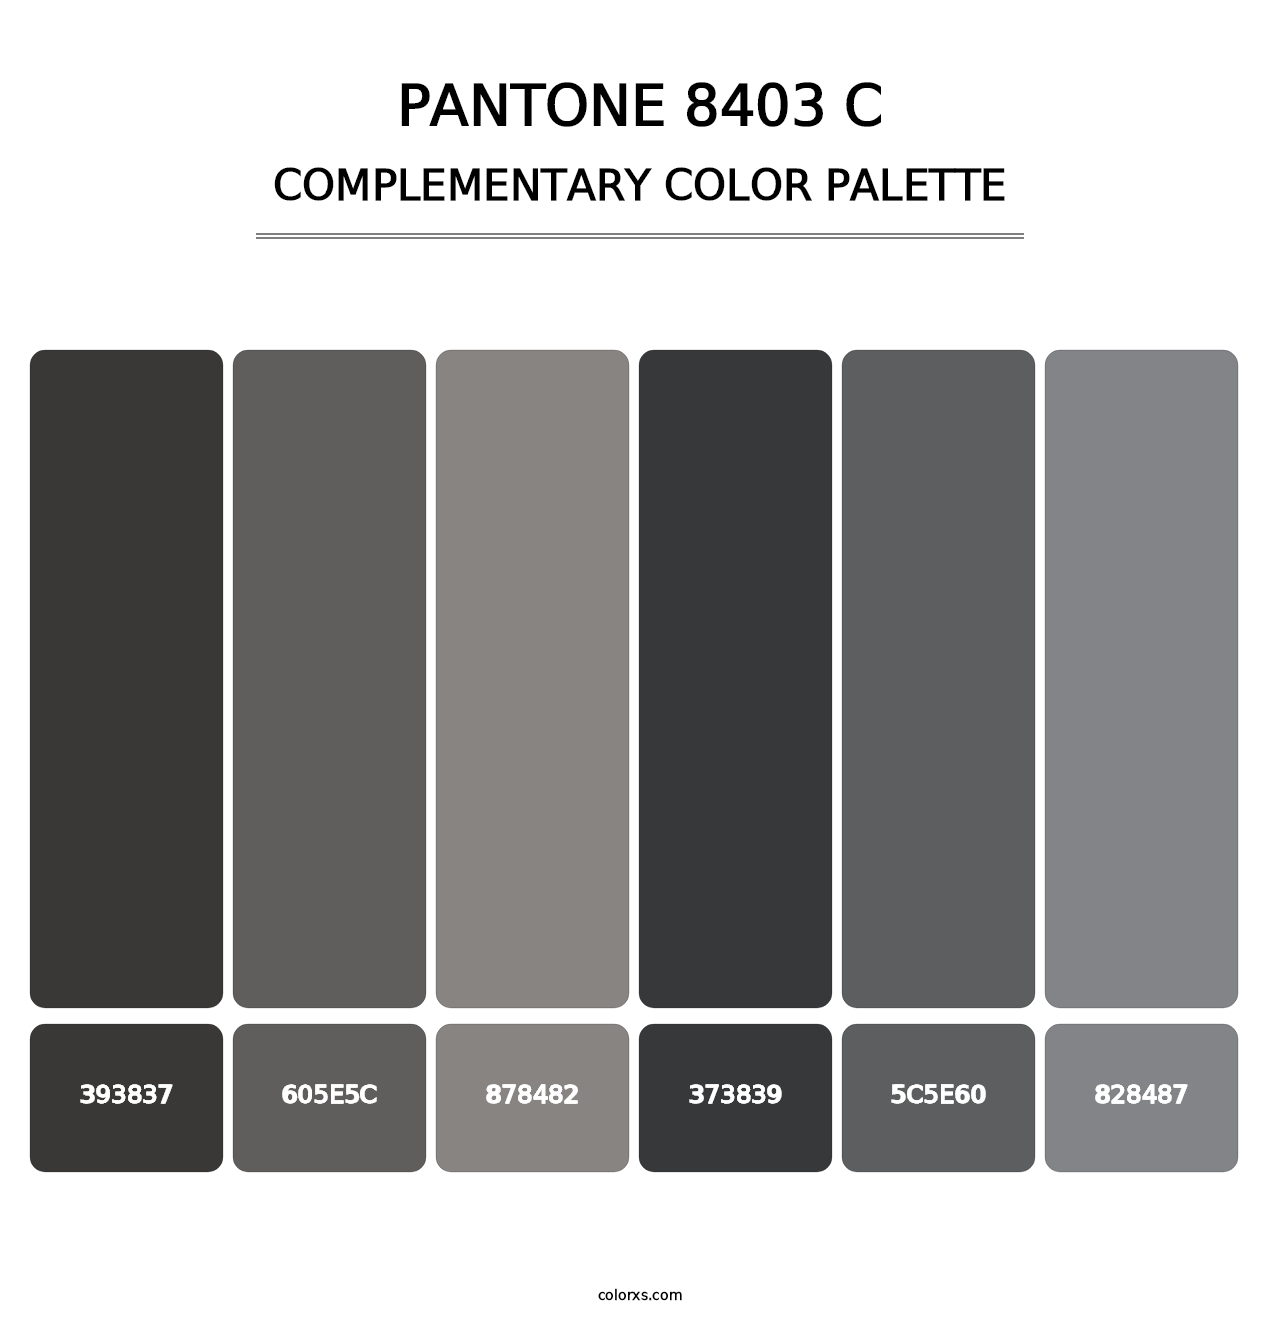 PANTONE 8403 C - Complementary Color Palette